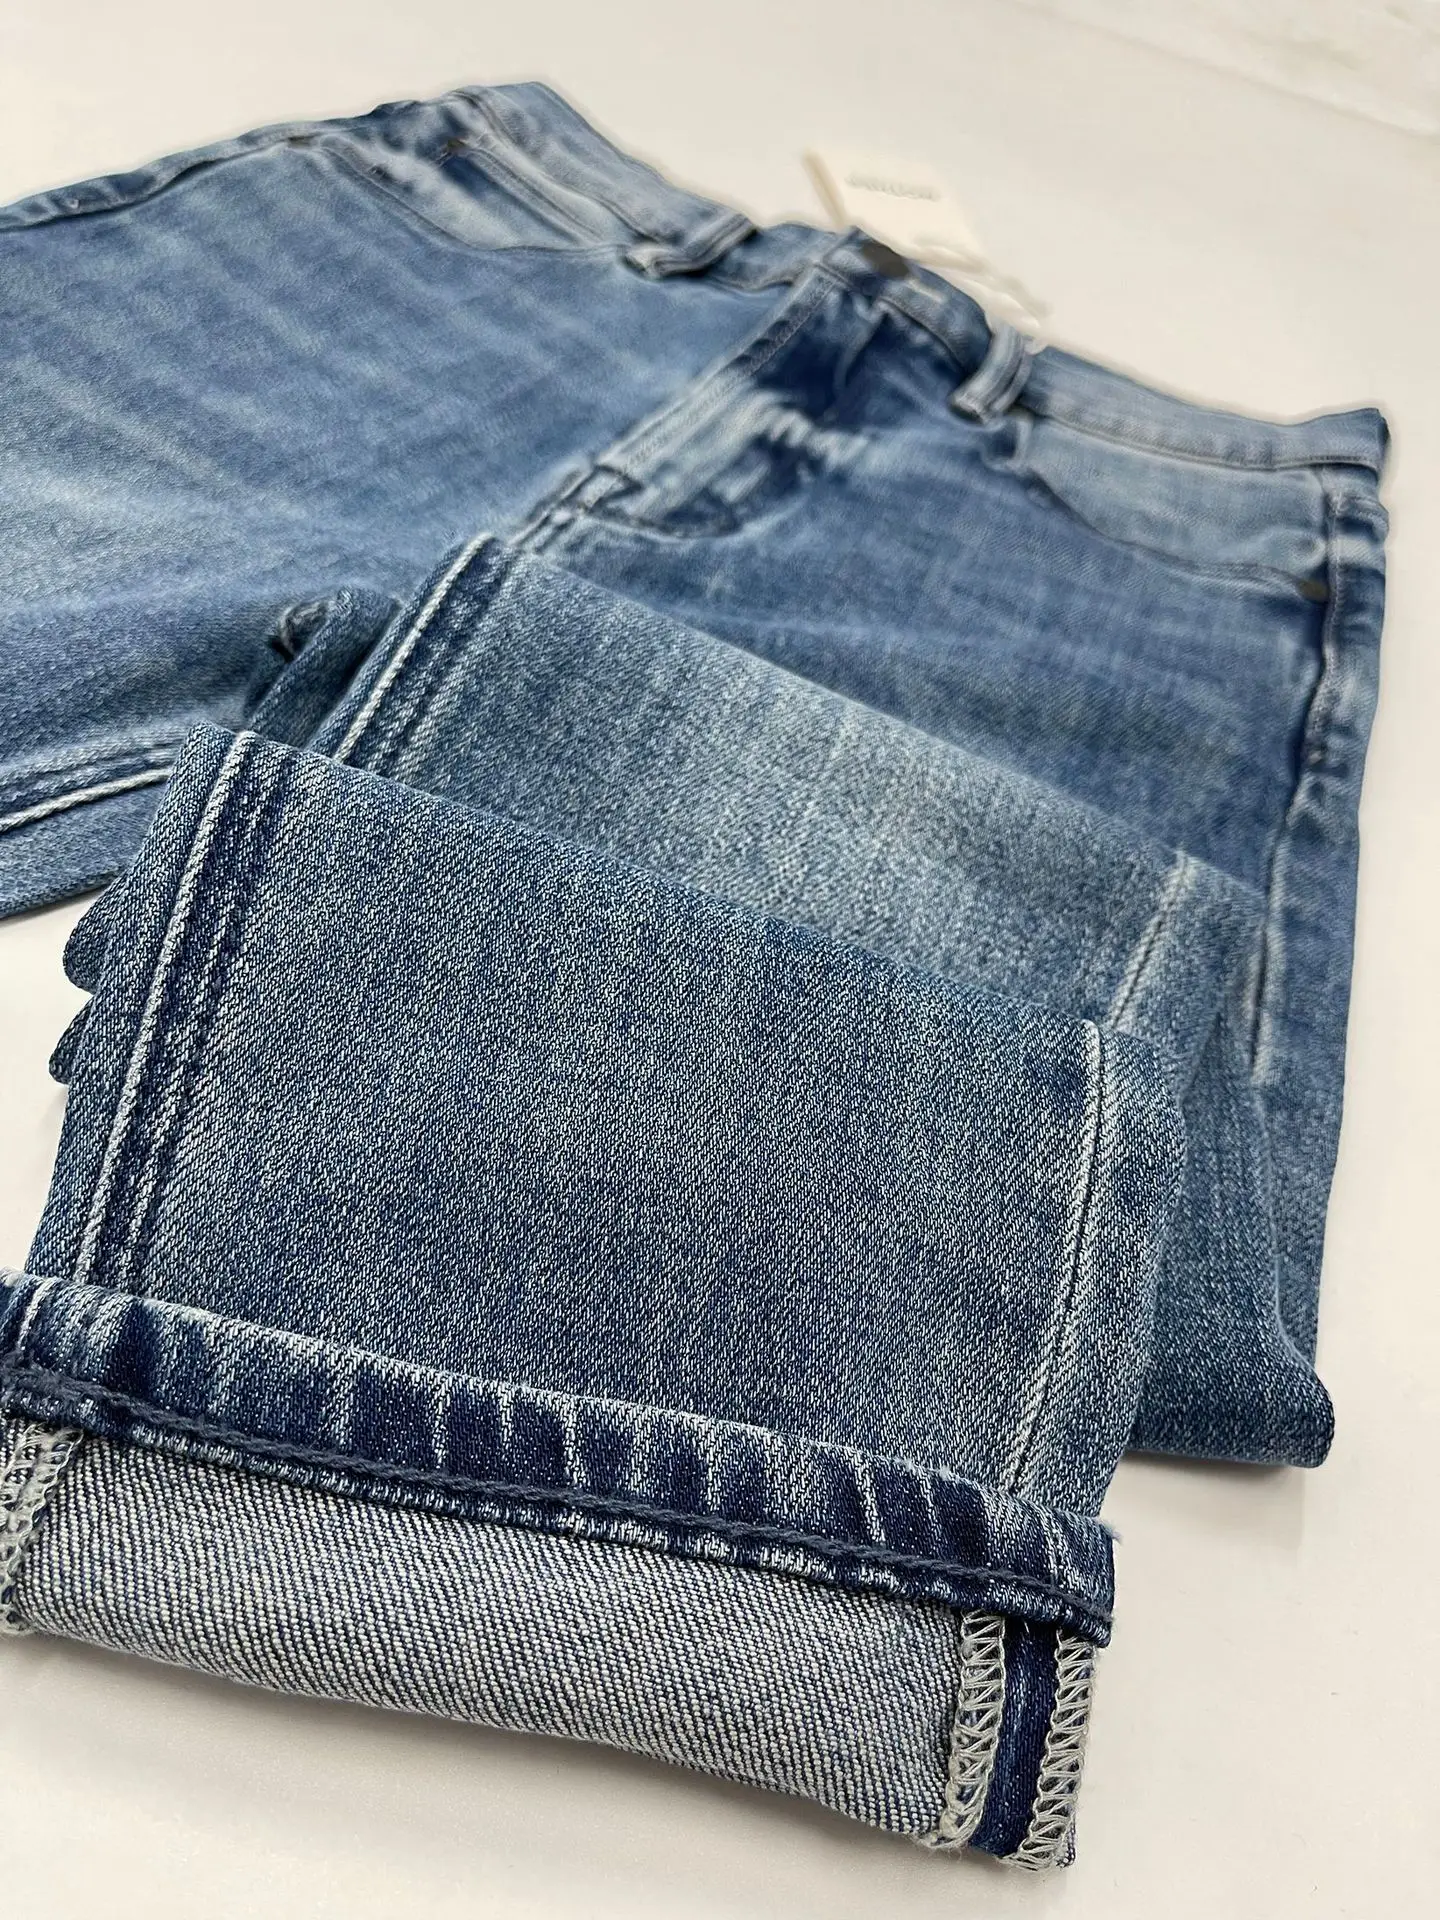 Women high waist slim jeans fashion casual denim ankle-length pants images - 6